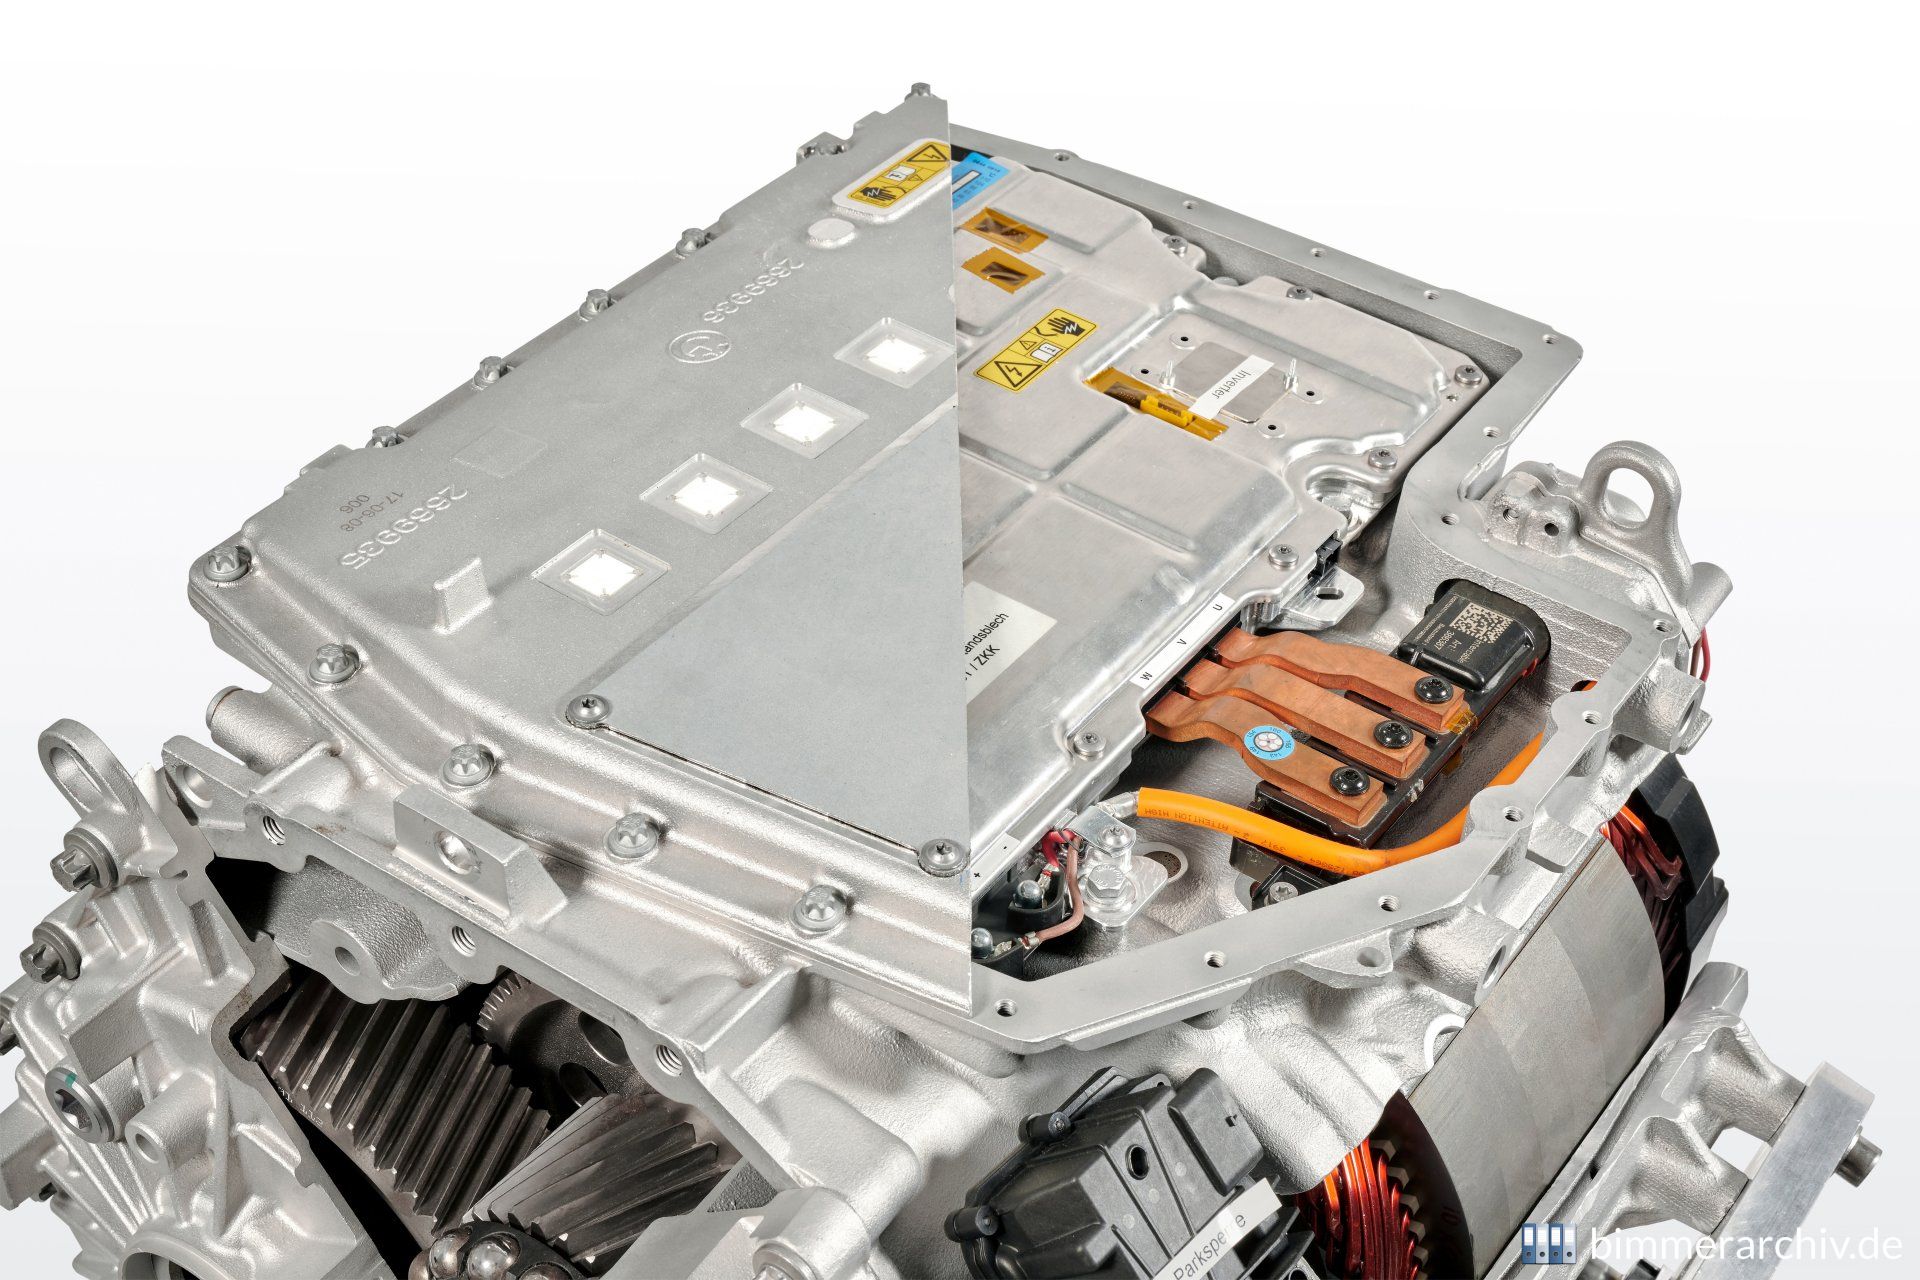 BMW iX3 Highly integrated BMW e-drive-unit cut model